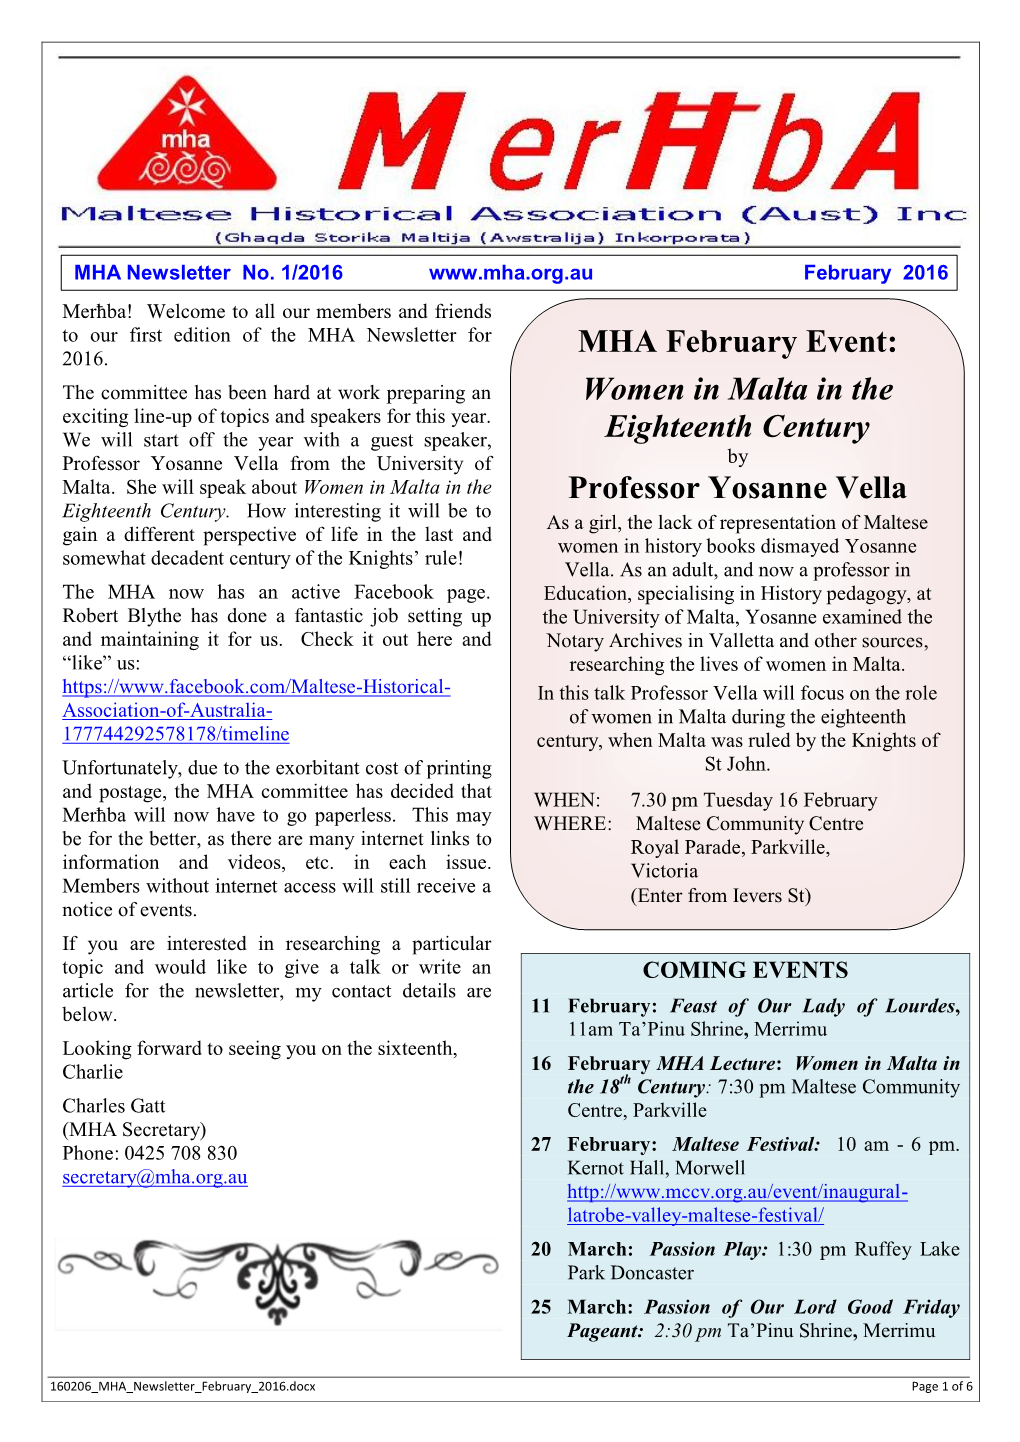 MHA February Event: Women in Malta in the Eighteenth Century